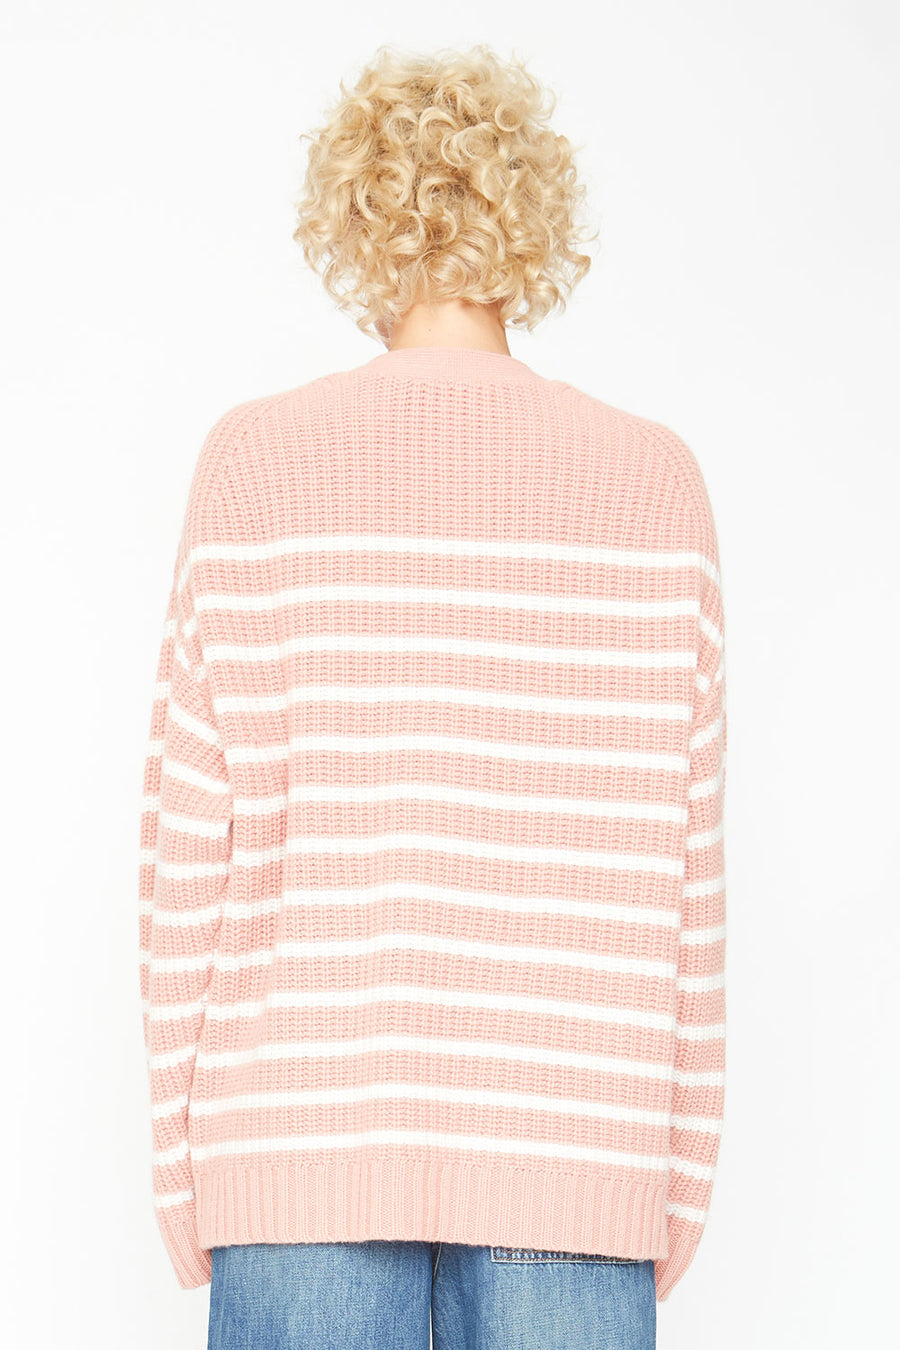 Grandpa Cardigan Sweater - Pink and White Stripe WOMENS chaserbrand